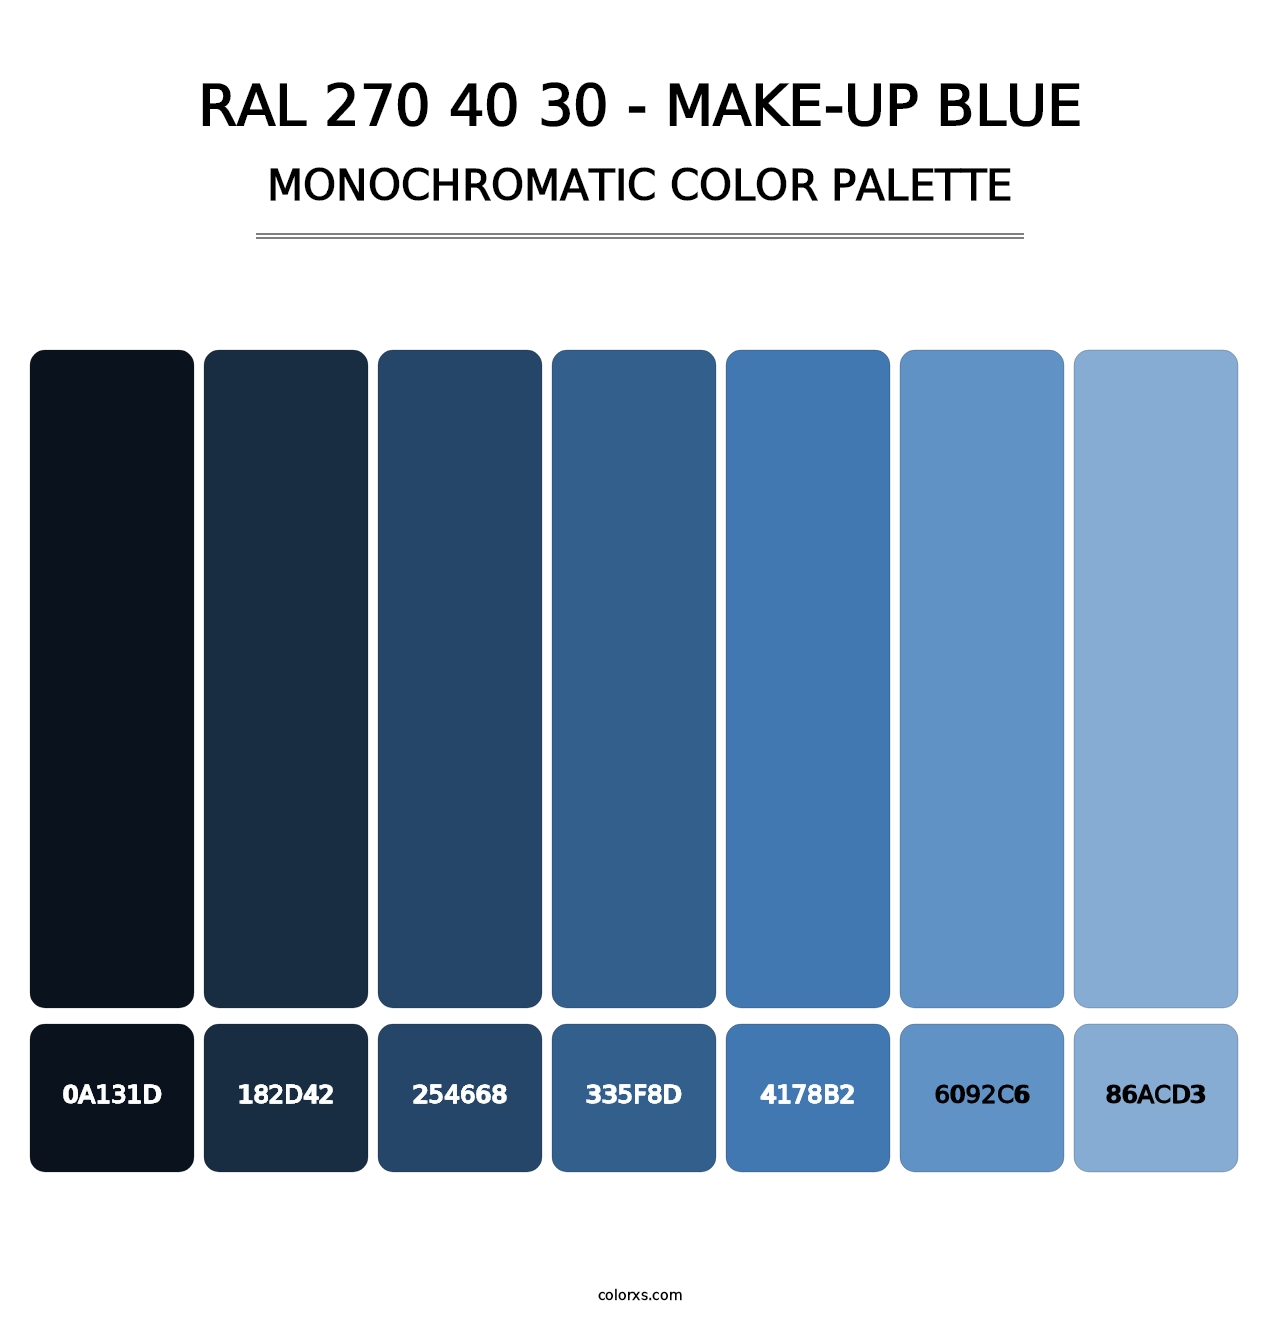 RAL 270 40 30 - Make-Up Blue - Monochromatic Color Palette